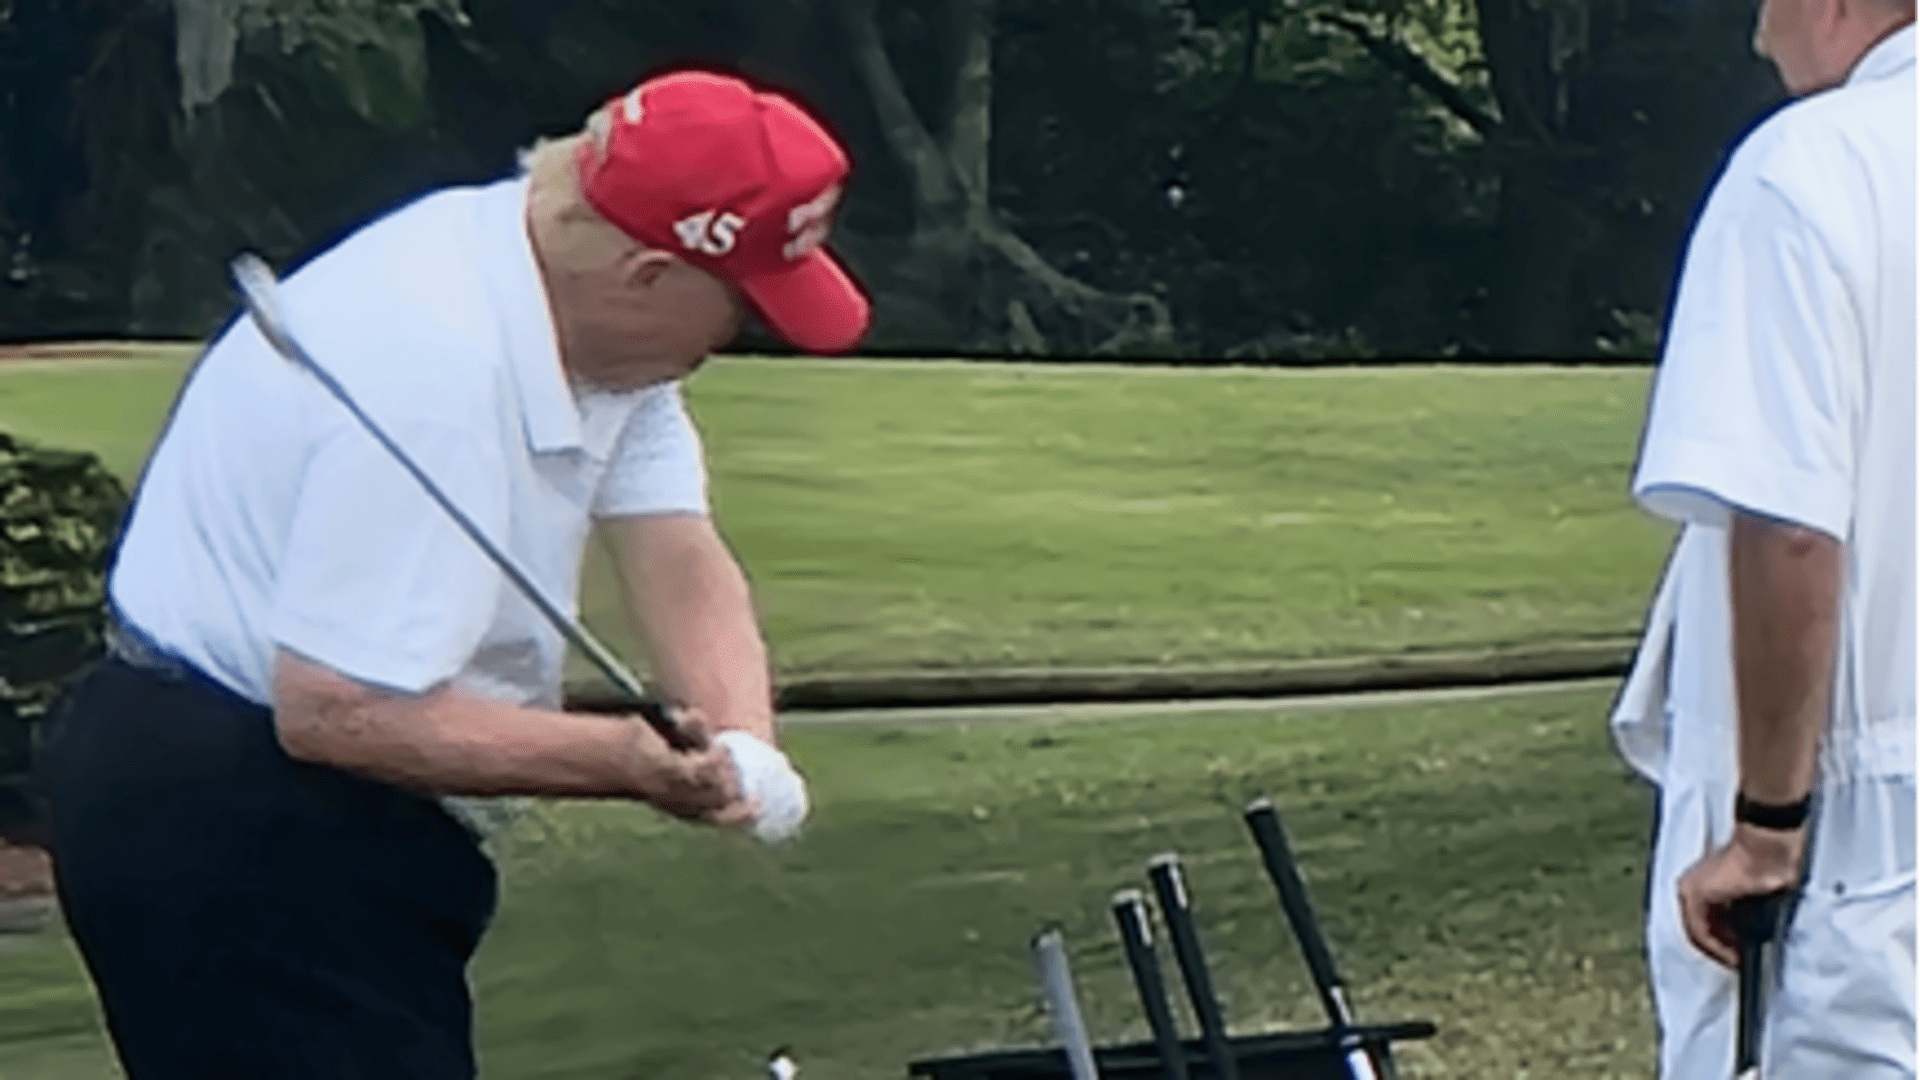 Former President Donald Trump played golf at Trump International Golf Club in West Palm Beach, Florida, per a source present with Trump.